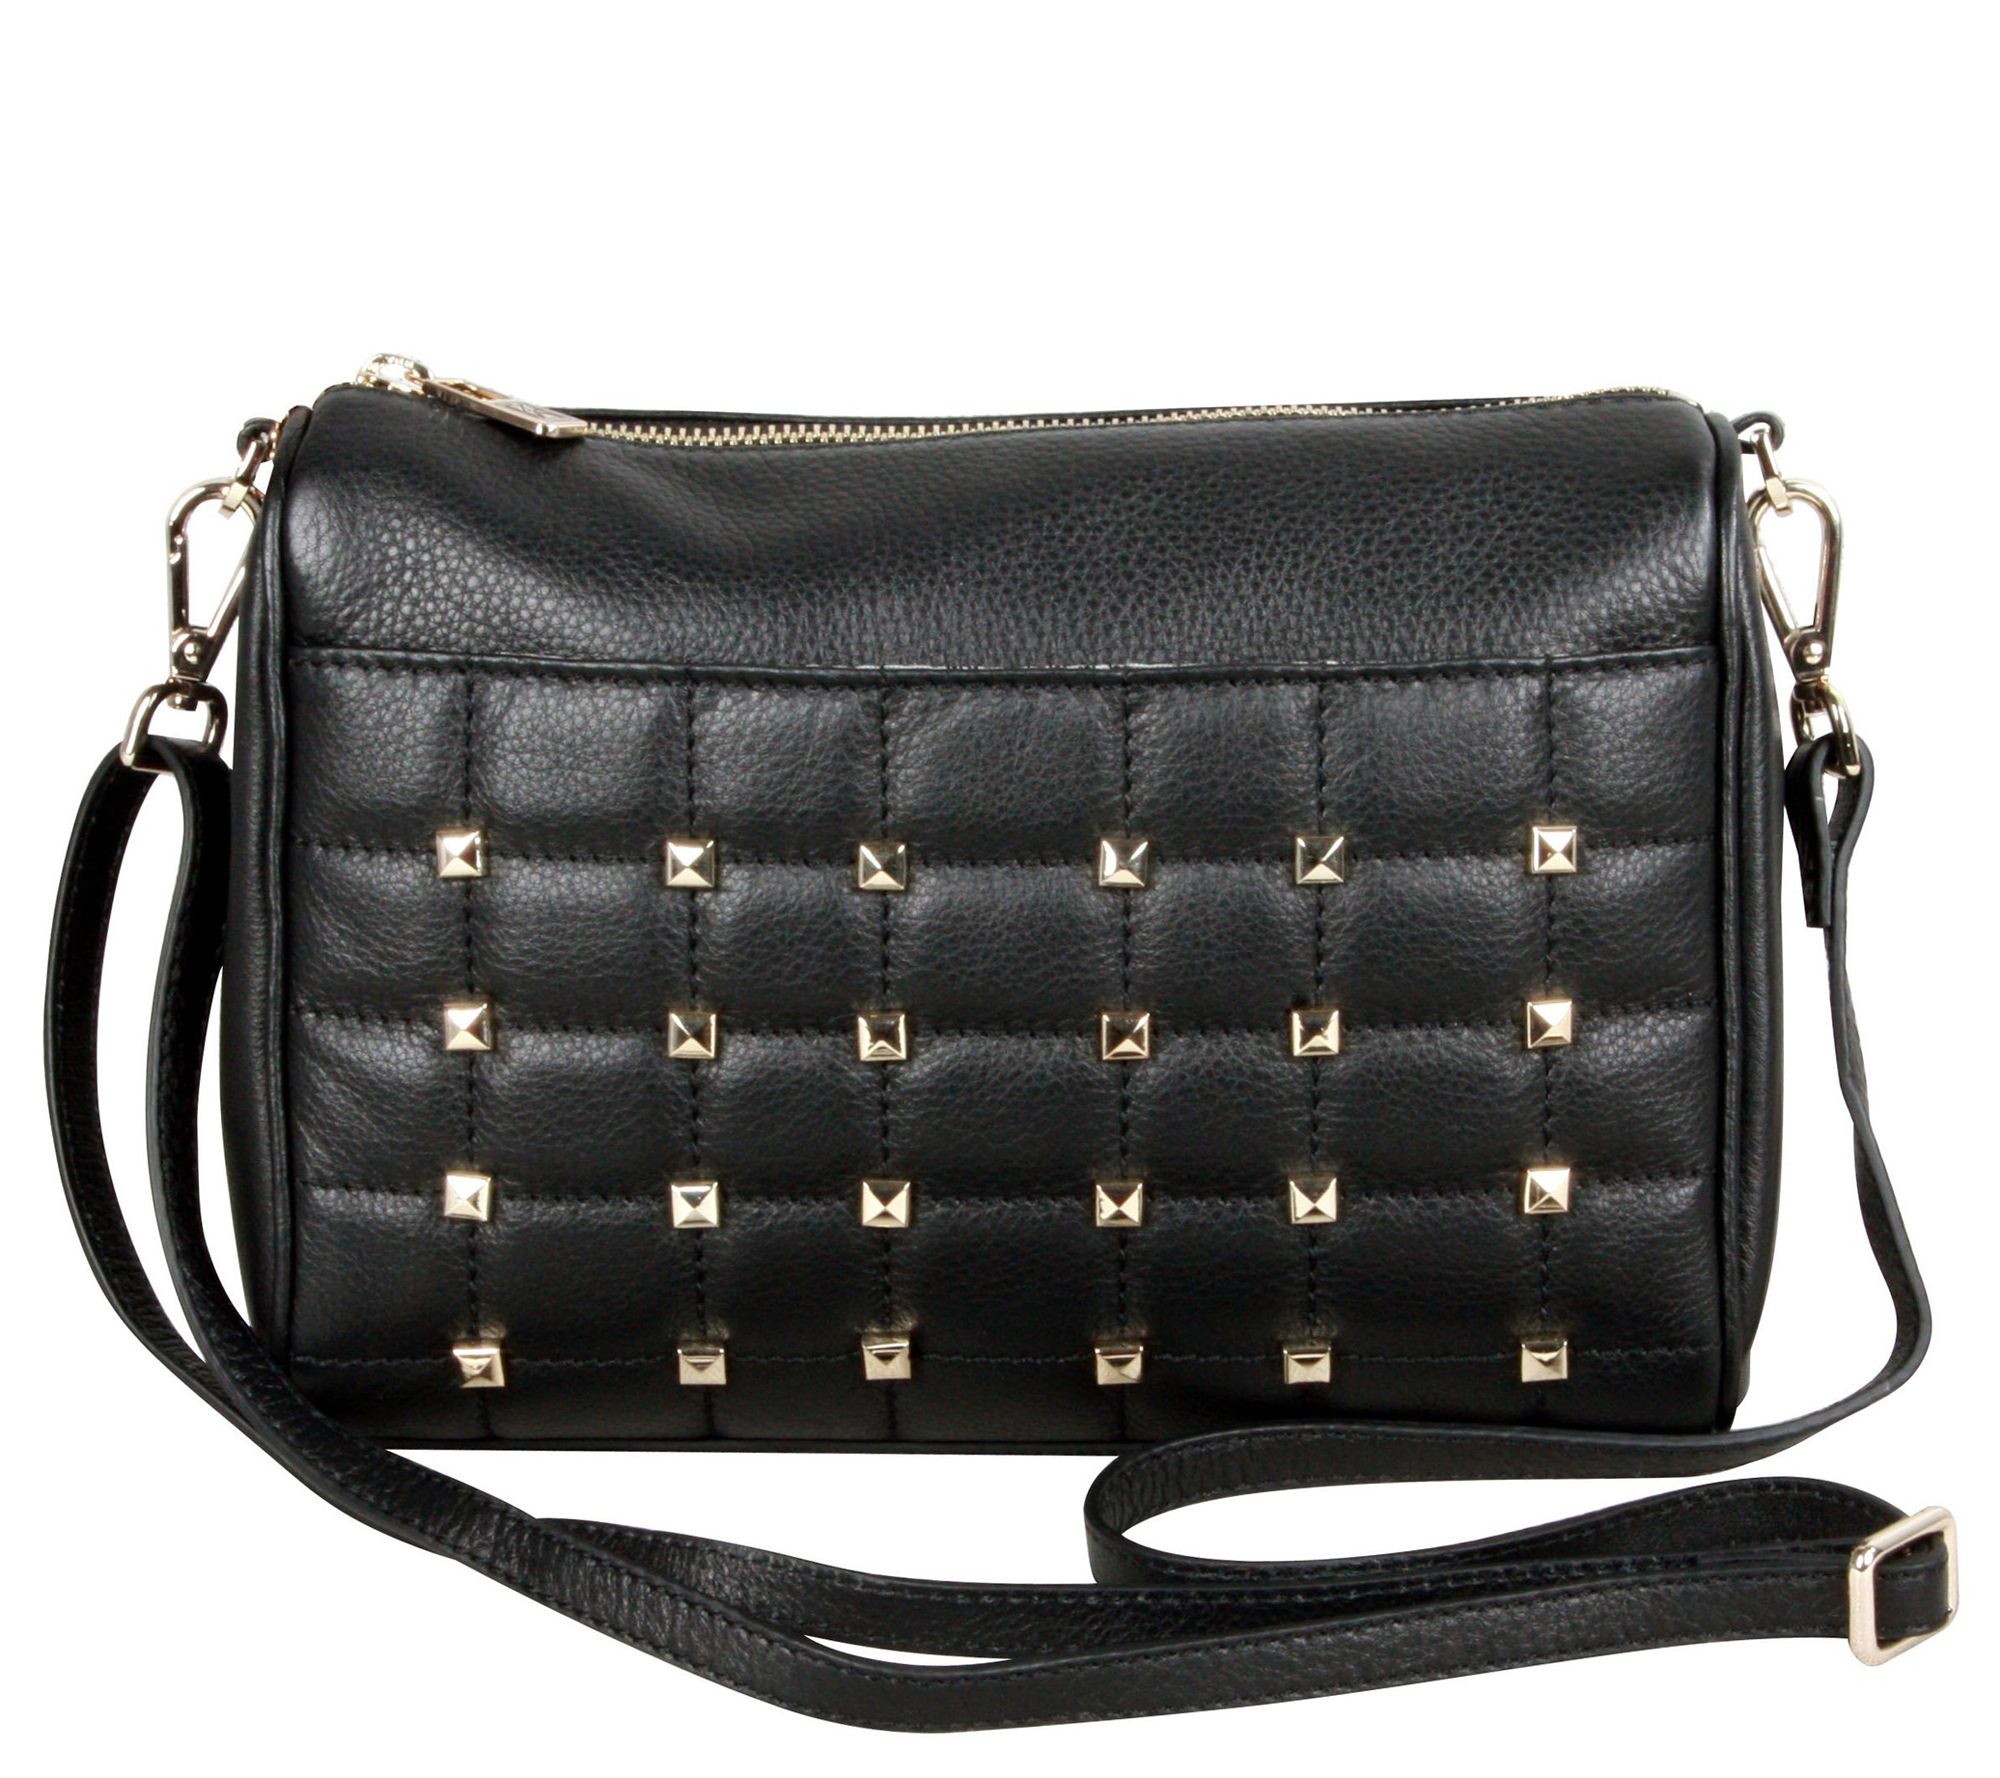 Karla Hanson Irene Studded Leather Crossbody Bag - QVC.com